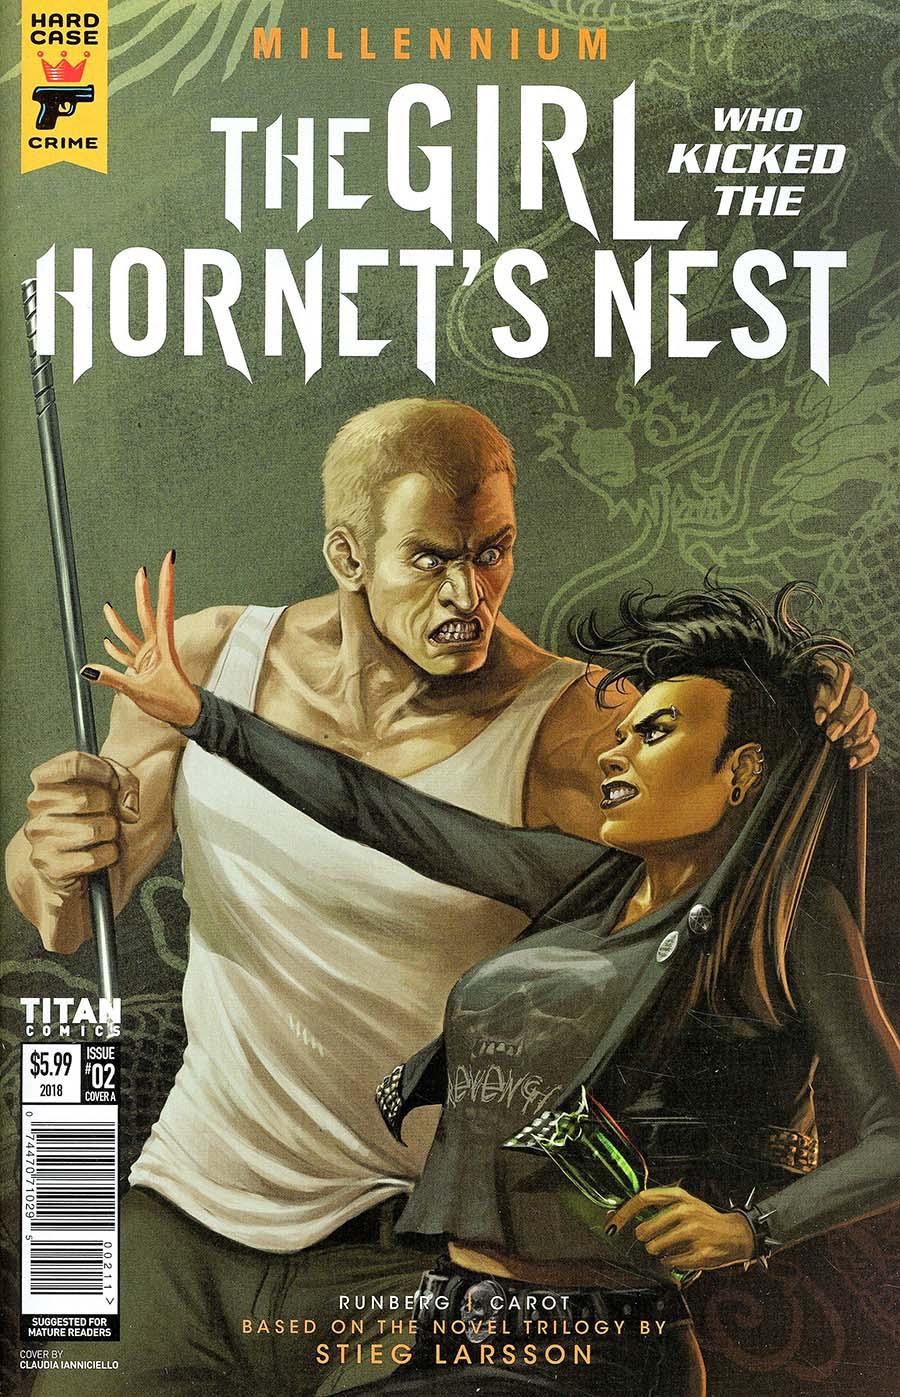 Hard Case Crime Millennium Girl Who Kicked The Hornets Nest Vol. 1 #2